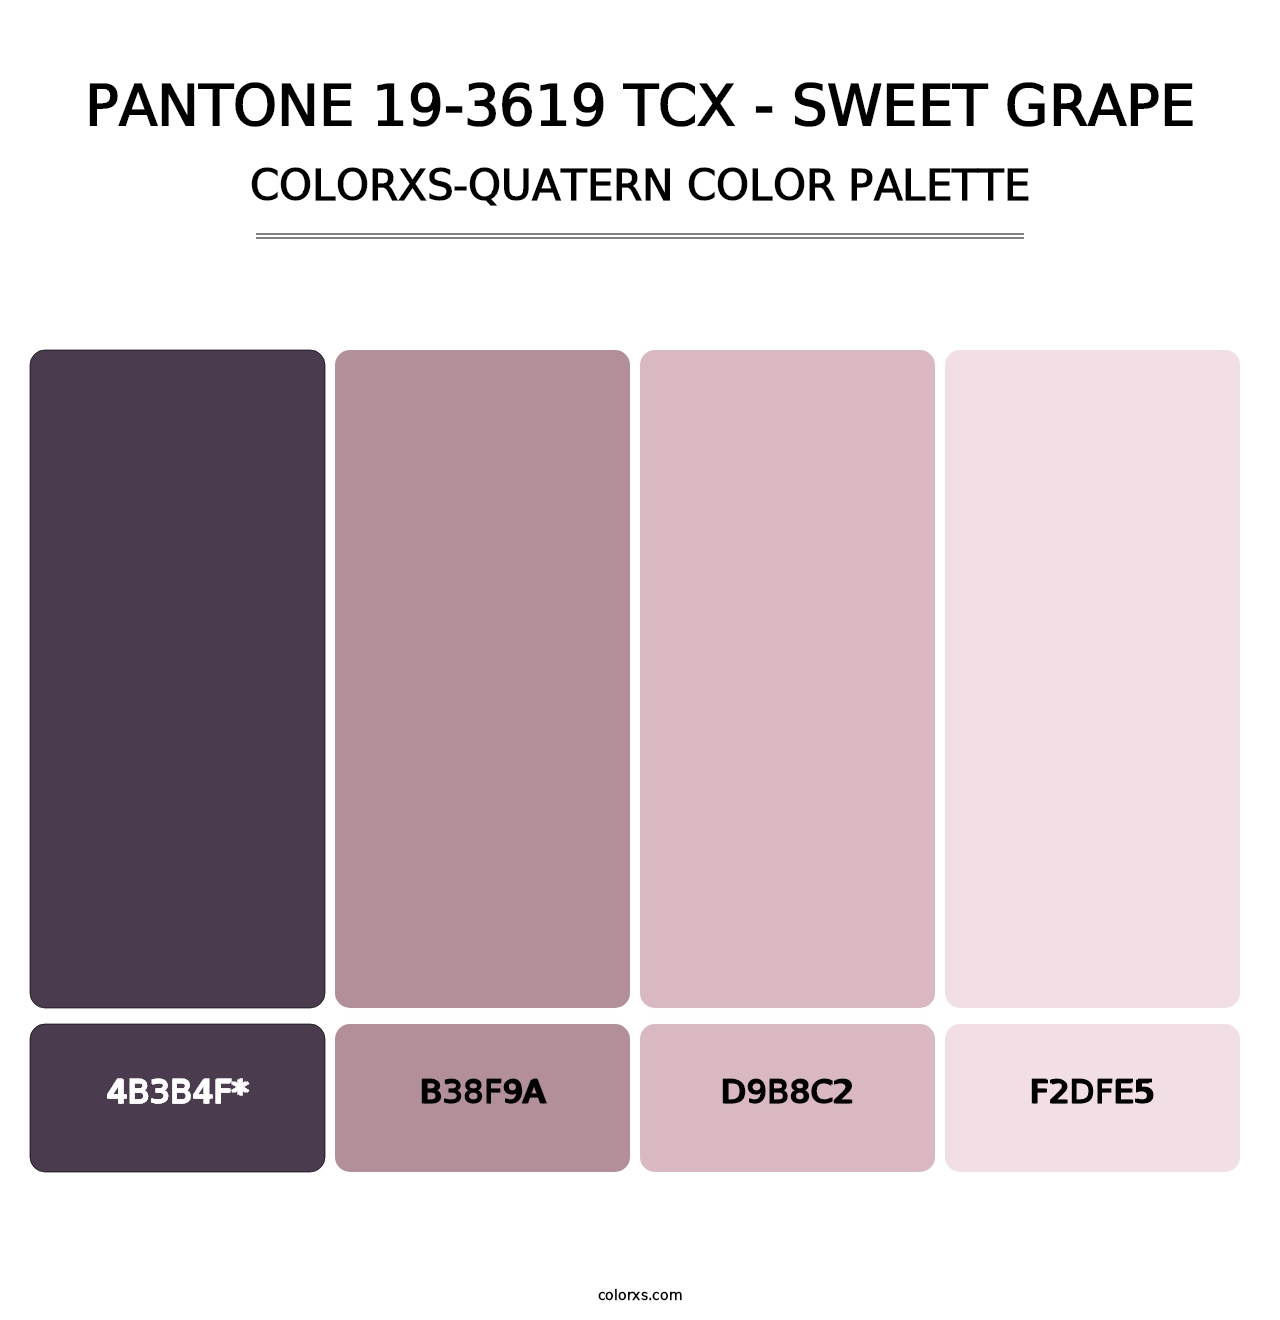 PANTONE 19-3619 TCX - Sweet Grape - Colorxs Quatern Palette